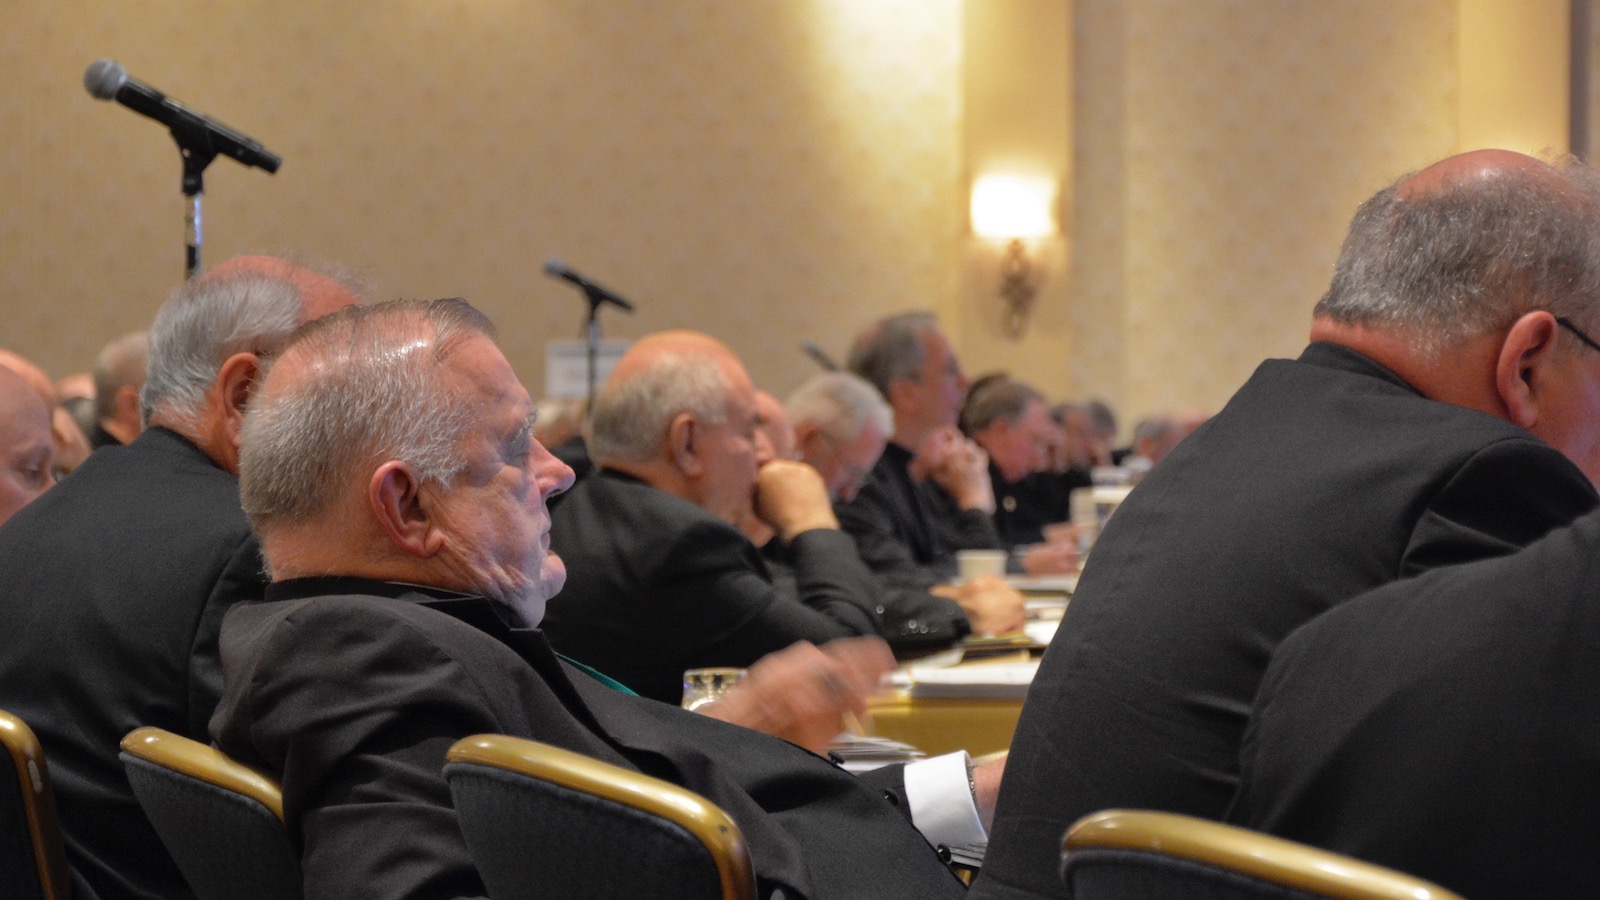 Bishops sit at the U.S. Conference of Catholic Bishops meeting in Baltimore, Maryland on November 13, 2018. RNS photo by Jack Jenkins